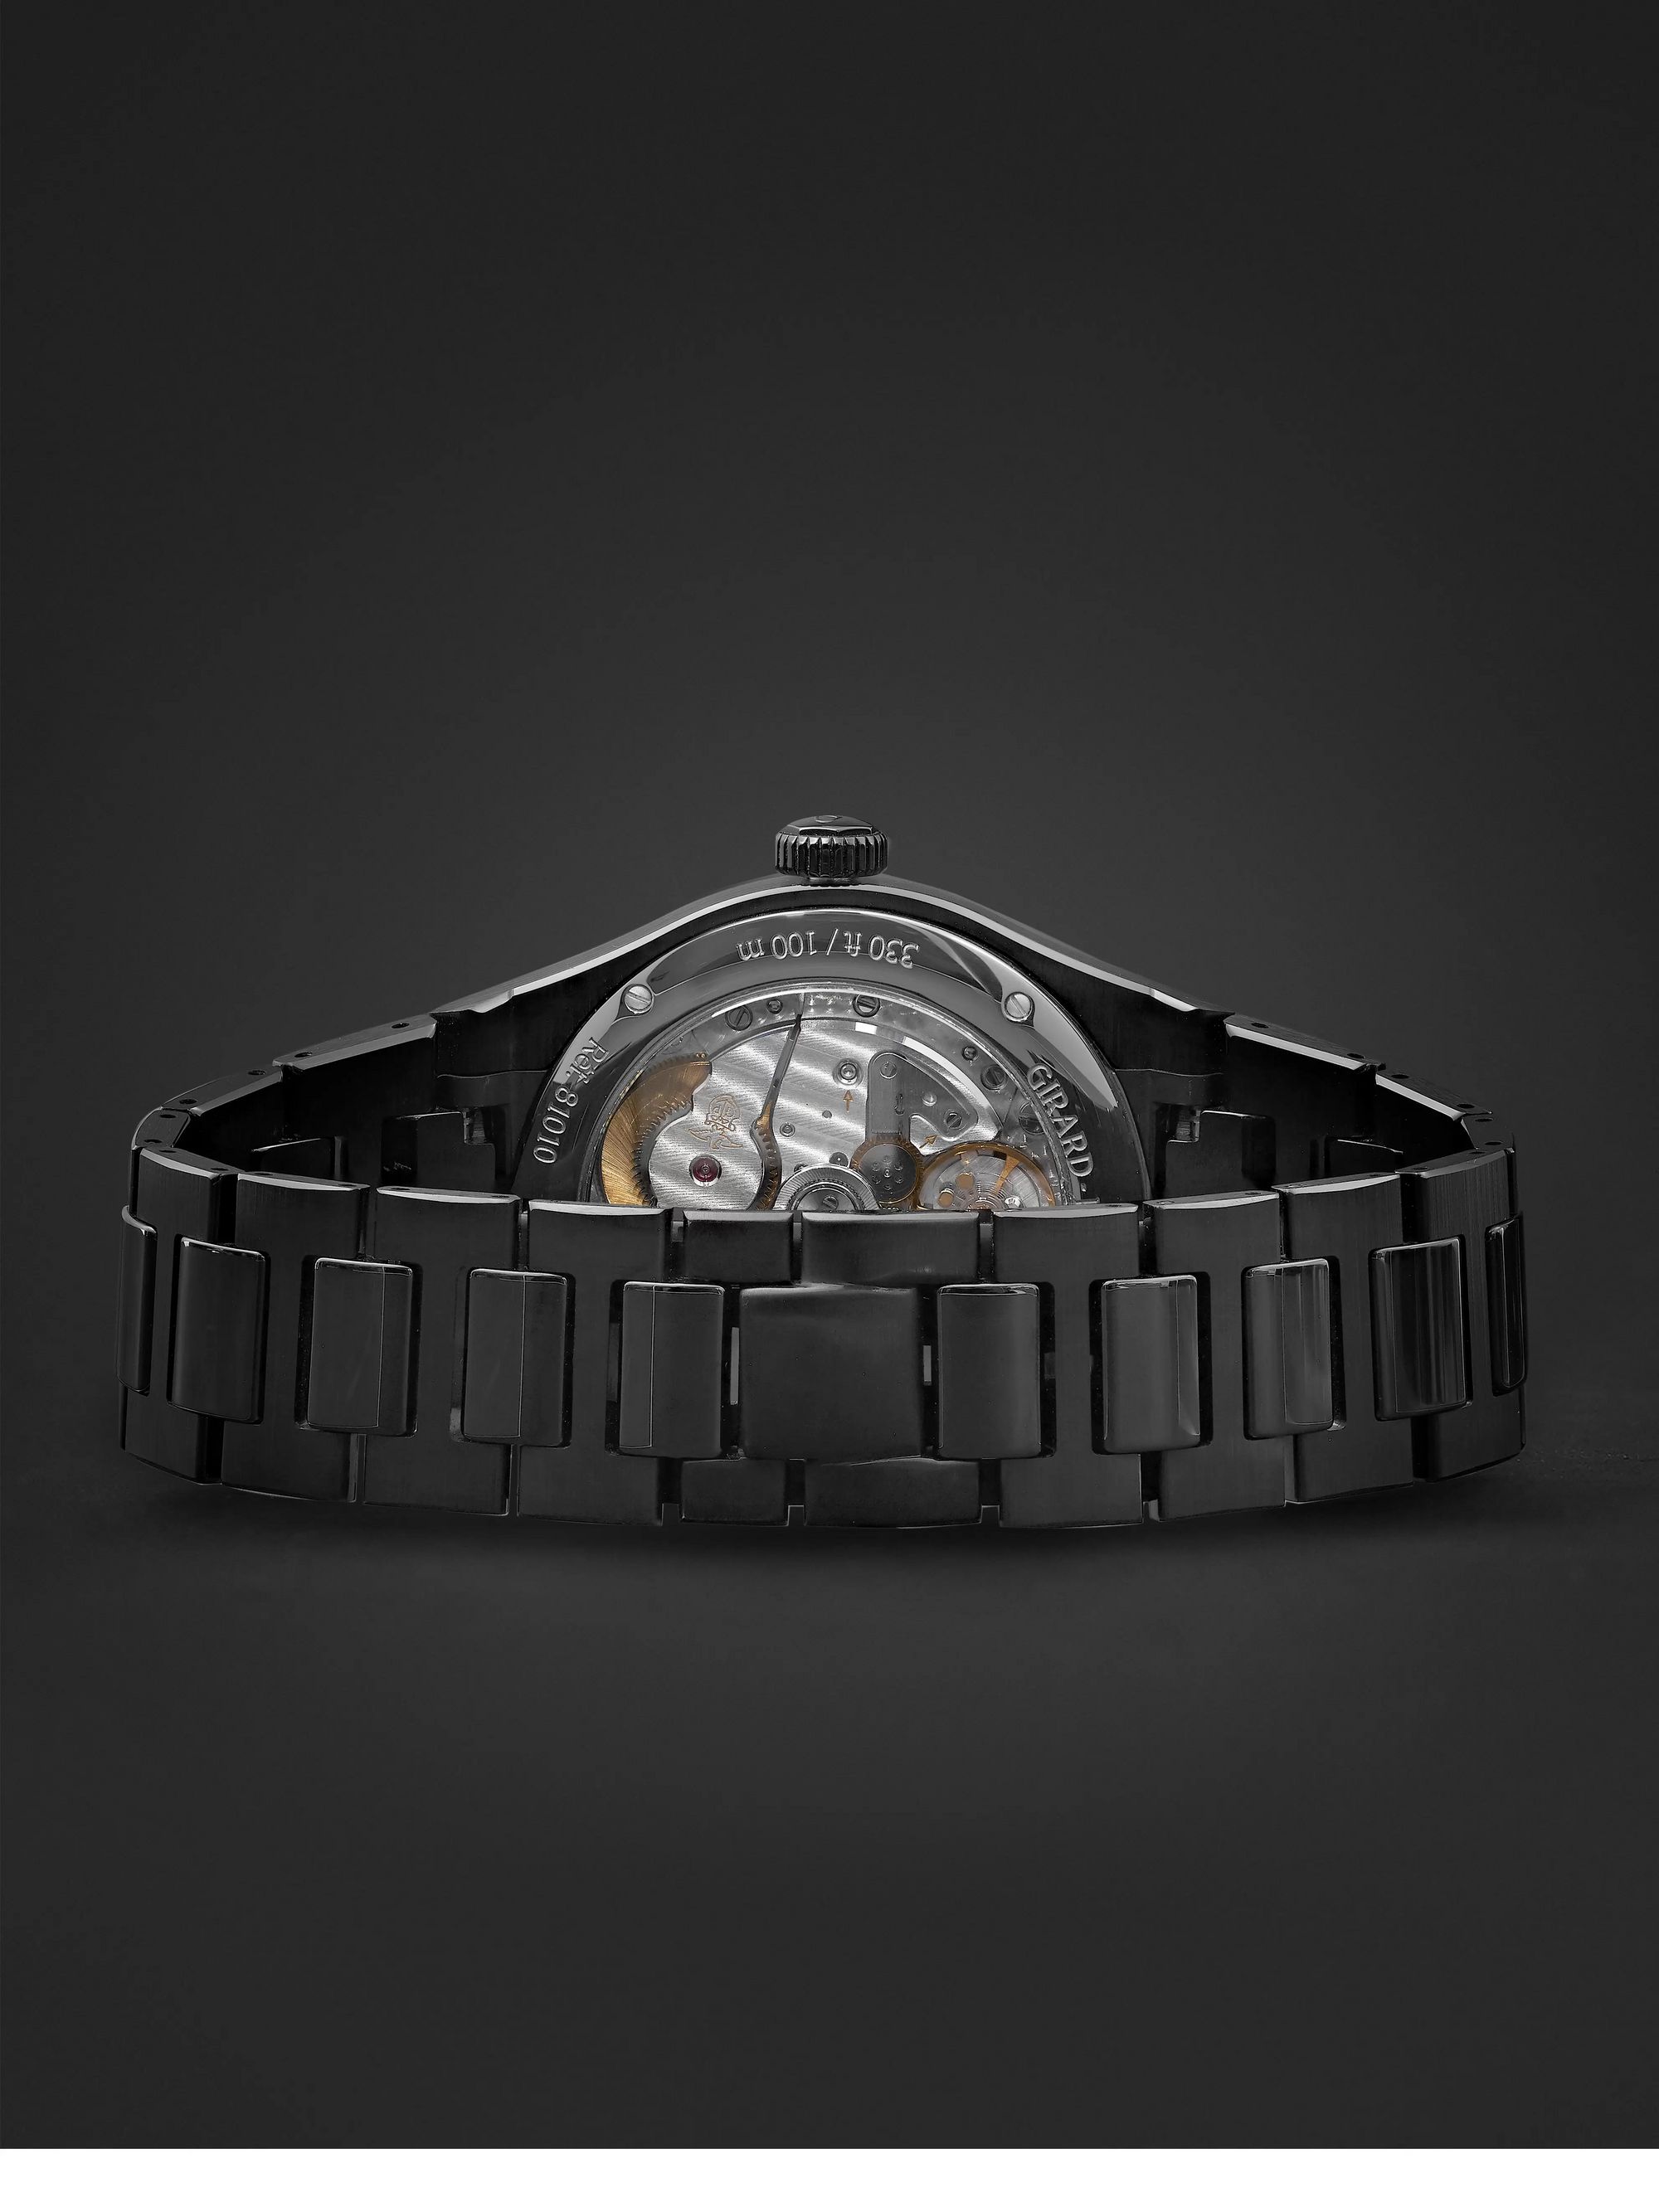 GIRARD-PERREGAUX Laureato Automatic 42mm Ceramic Watch, Ref. No. 81010-32-631-32A